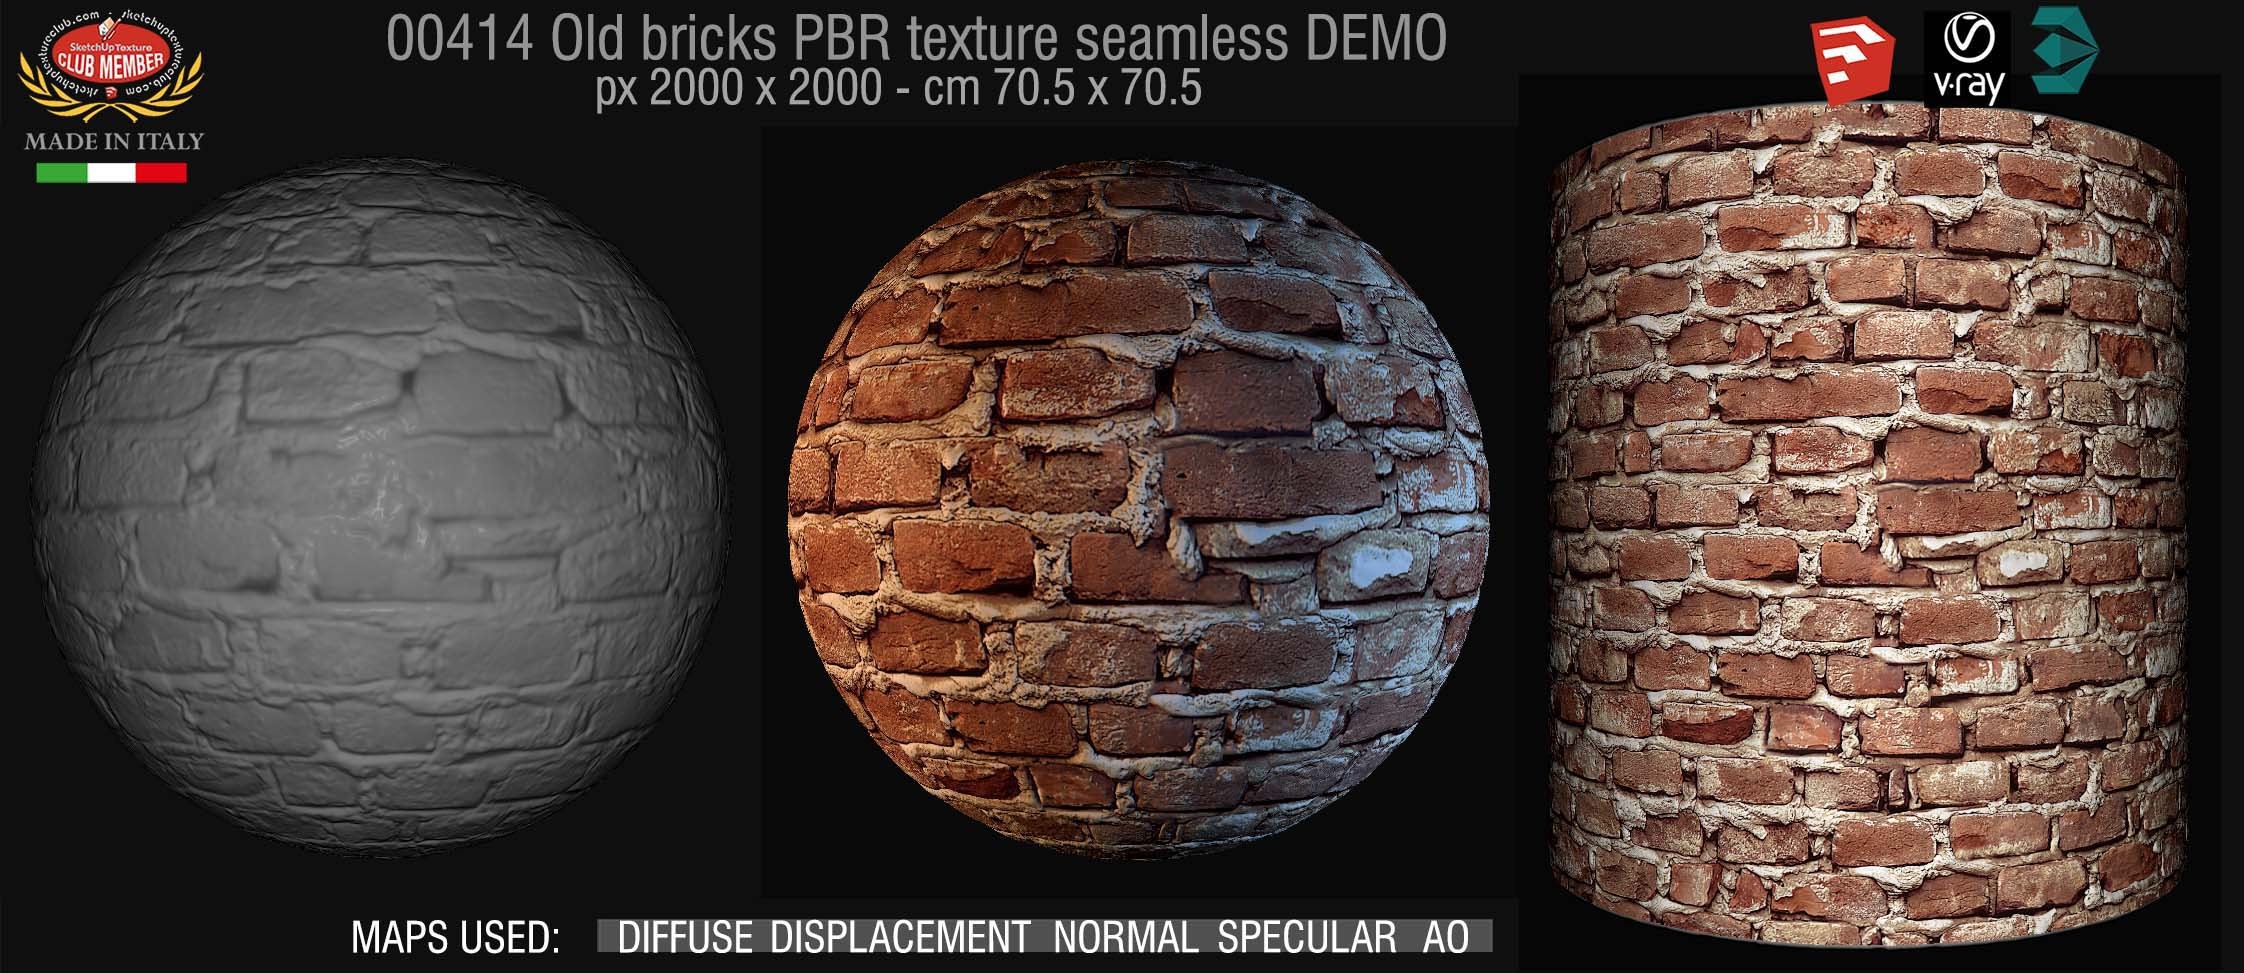 00414 Old bricks PBR texture seamless DEMO